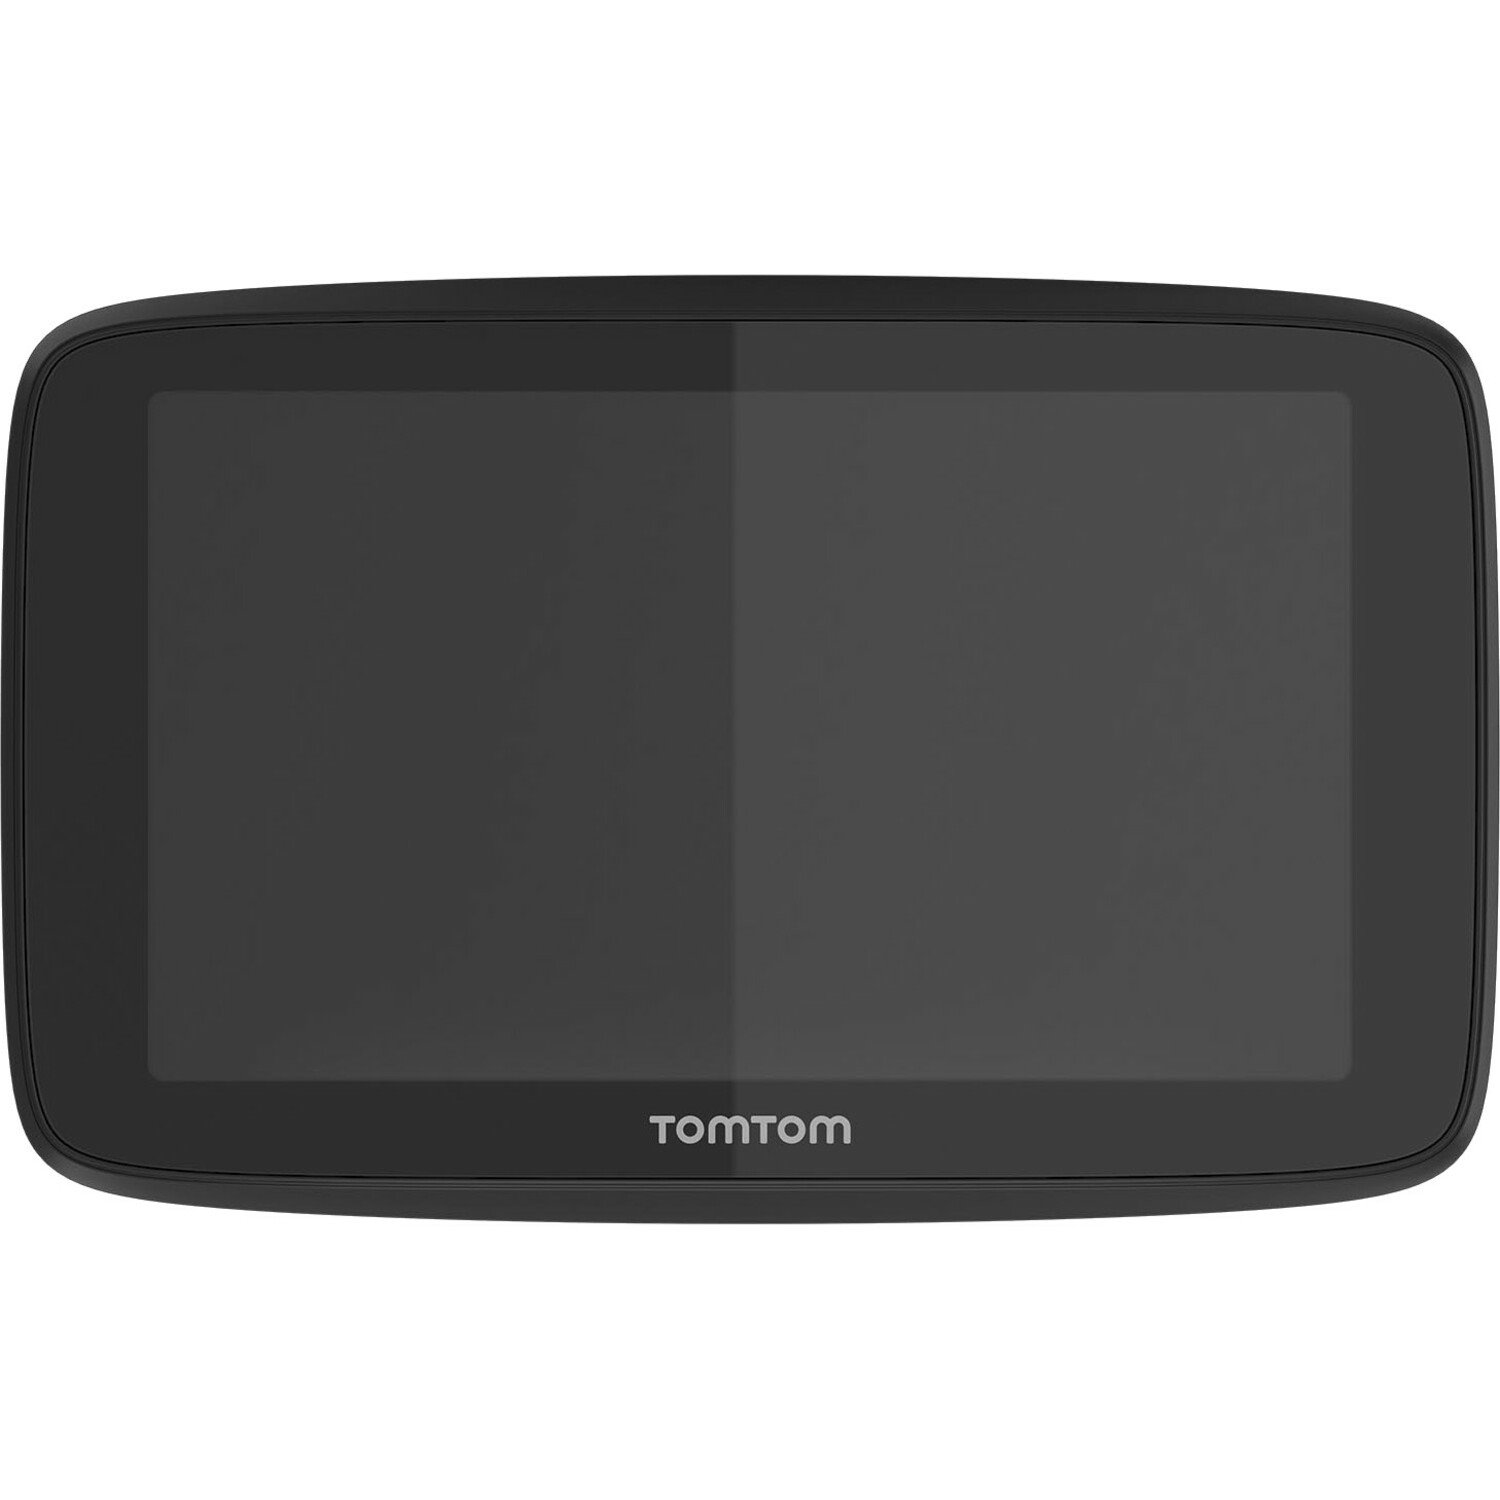 Tomtom GO Essential Automobile Portable GPS Navigator - Black - Portable, Mountable